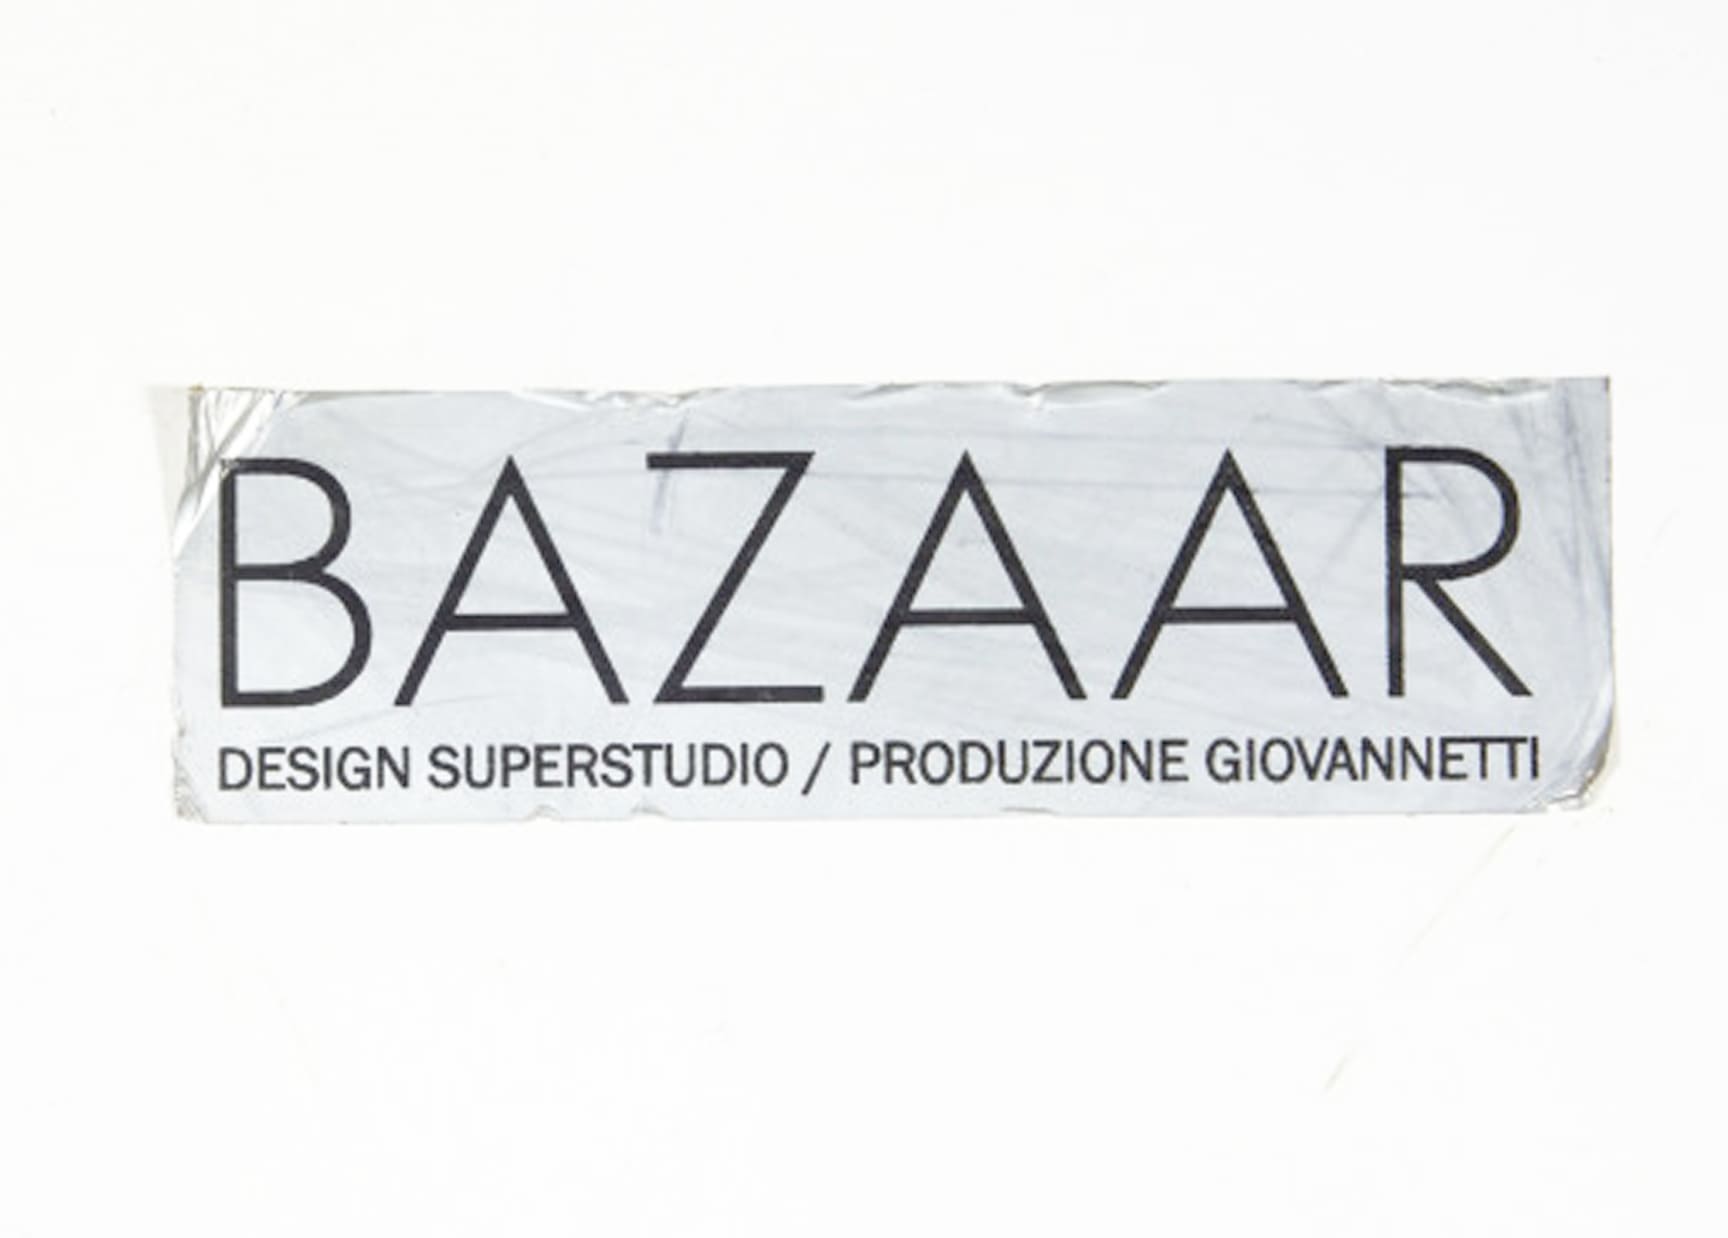 canapé bazaar superstudio signature